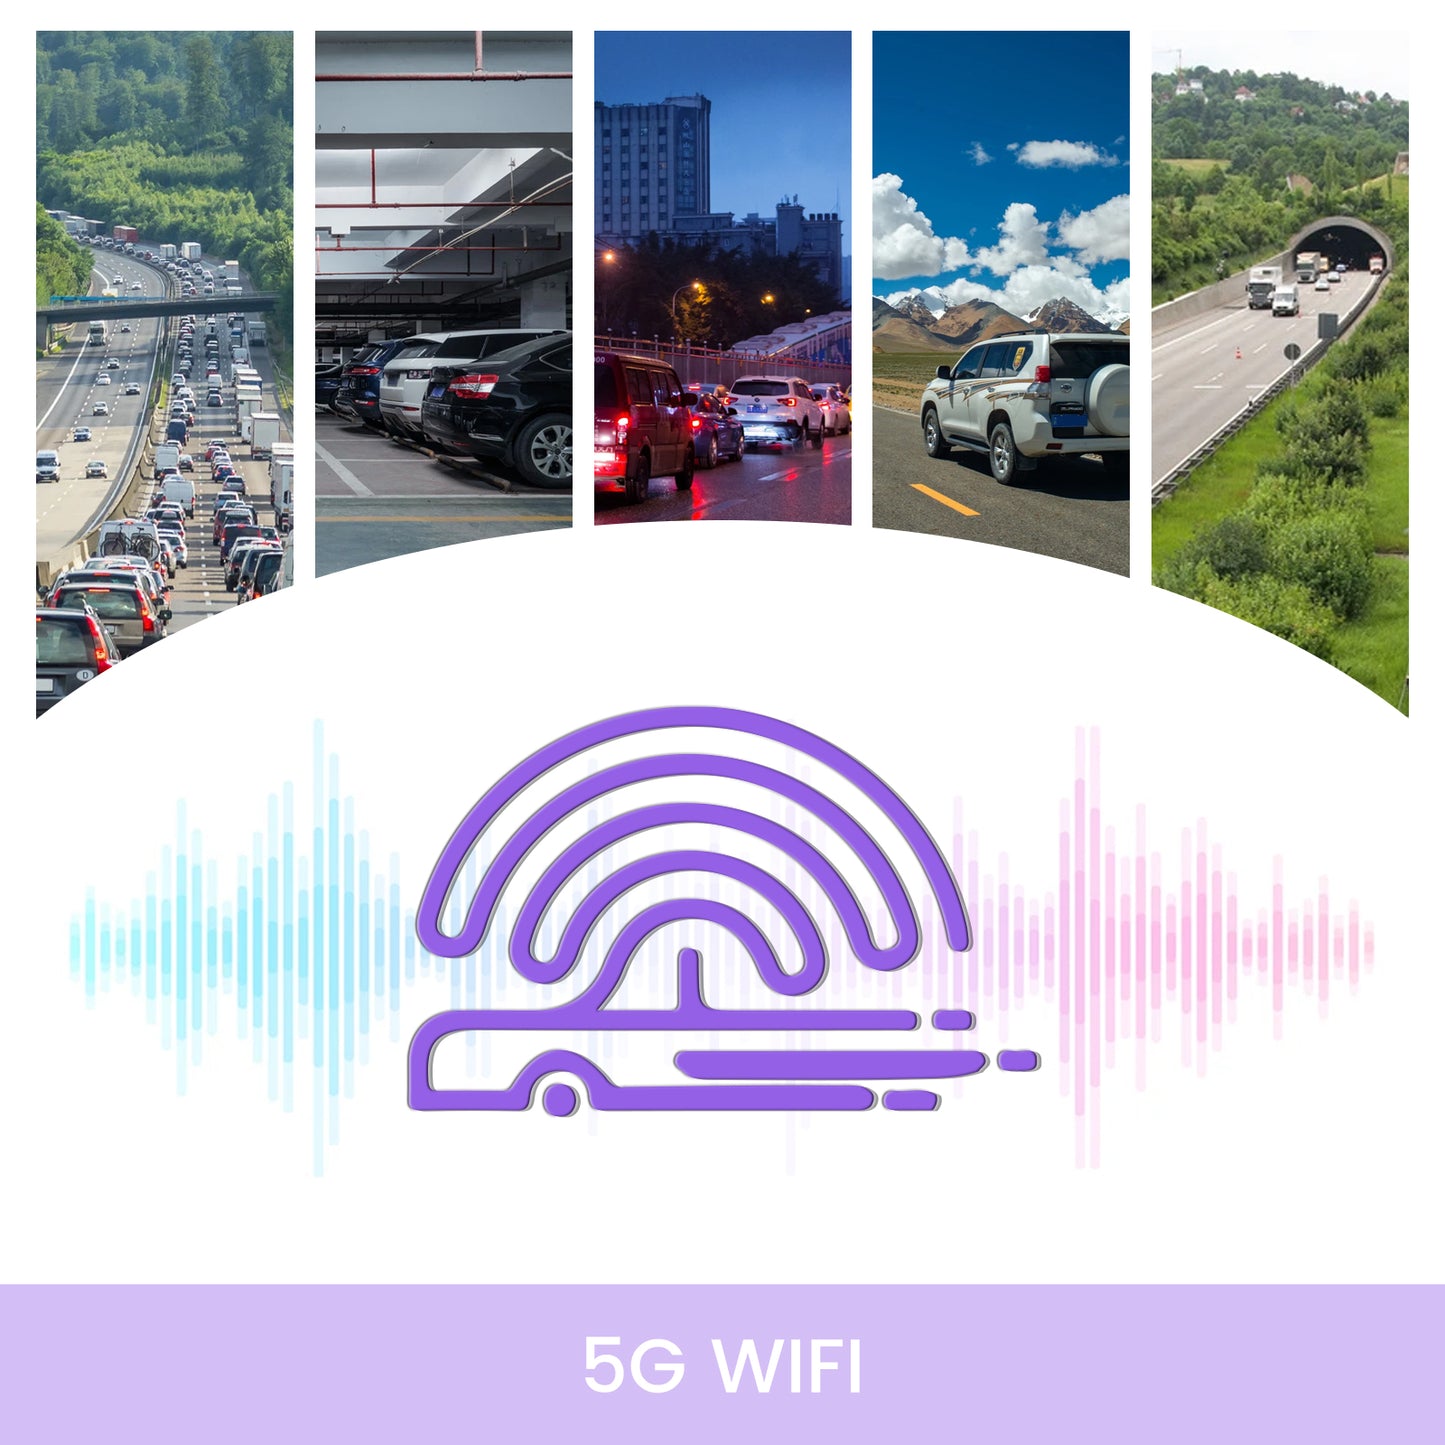 Roadanvi F10 for VW Golf 7 2012 2013 2014 2015 2016 2017 2018 2019 Car Stereo Android Auto Apple Carplay AI Voice Control 8G 128G Radio Wifi Video